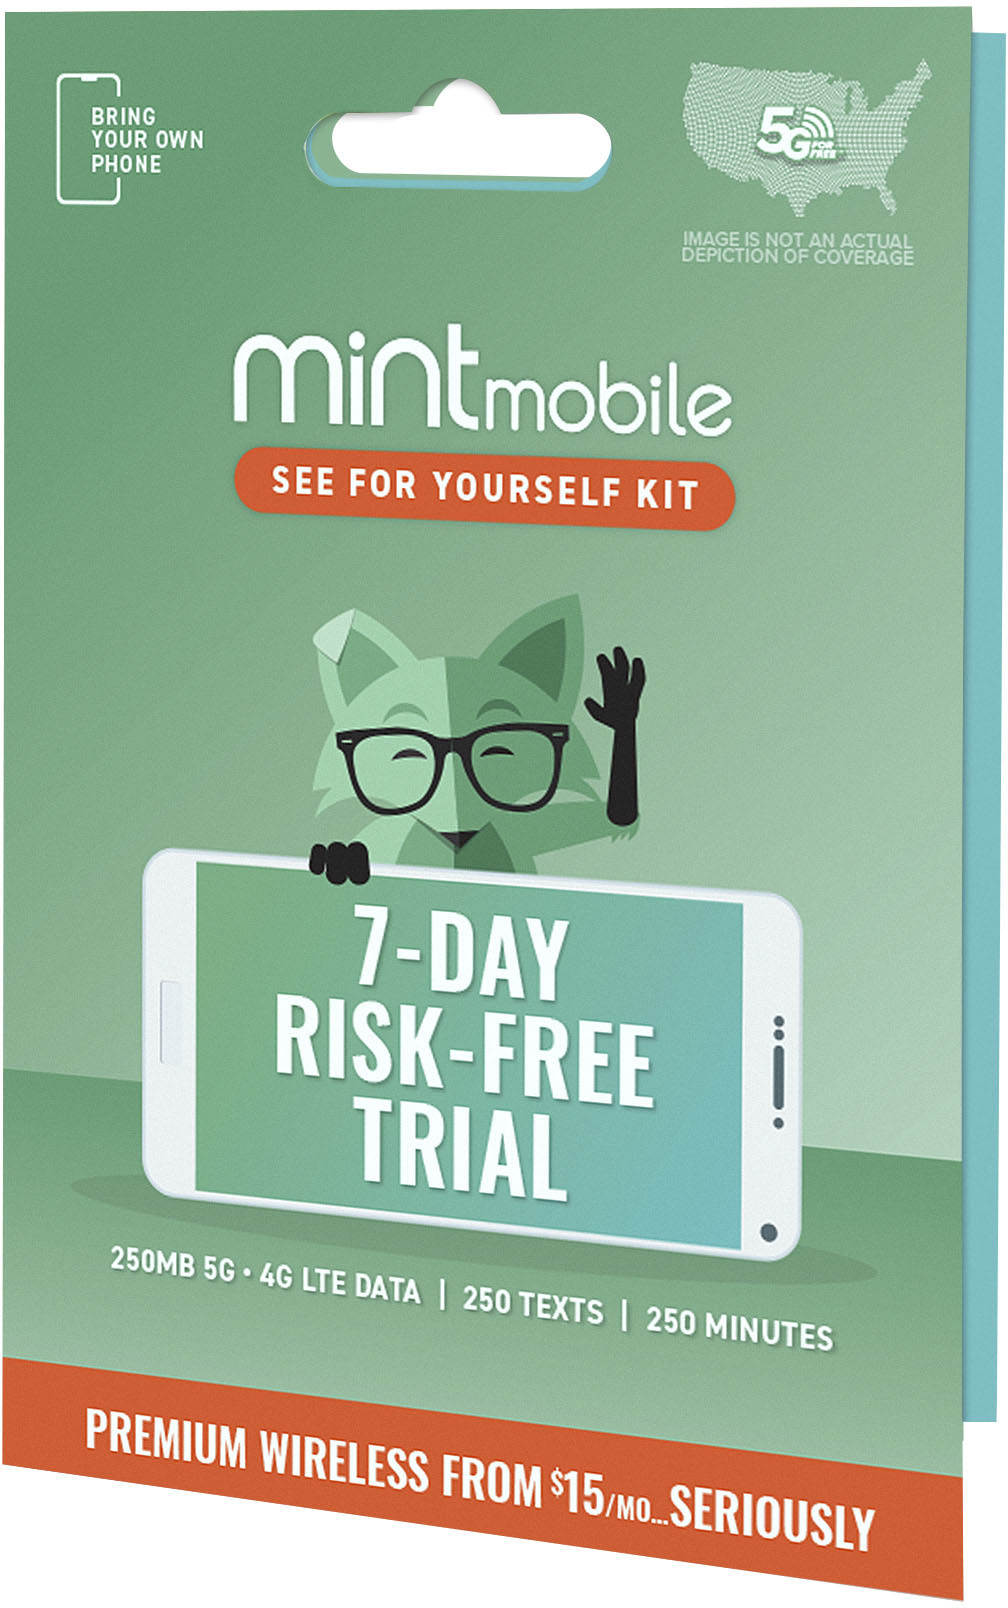 Mint Mobile - $5 Prepaid SIM Card Kit